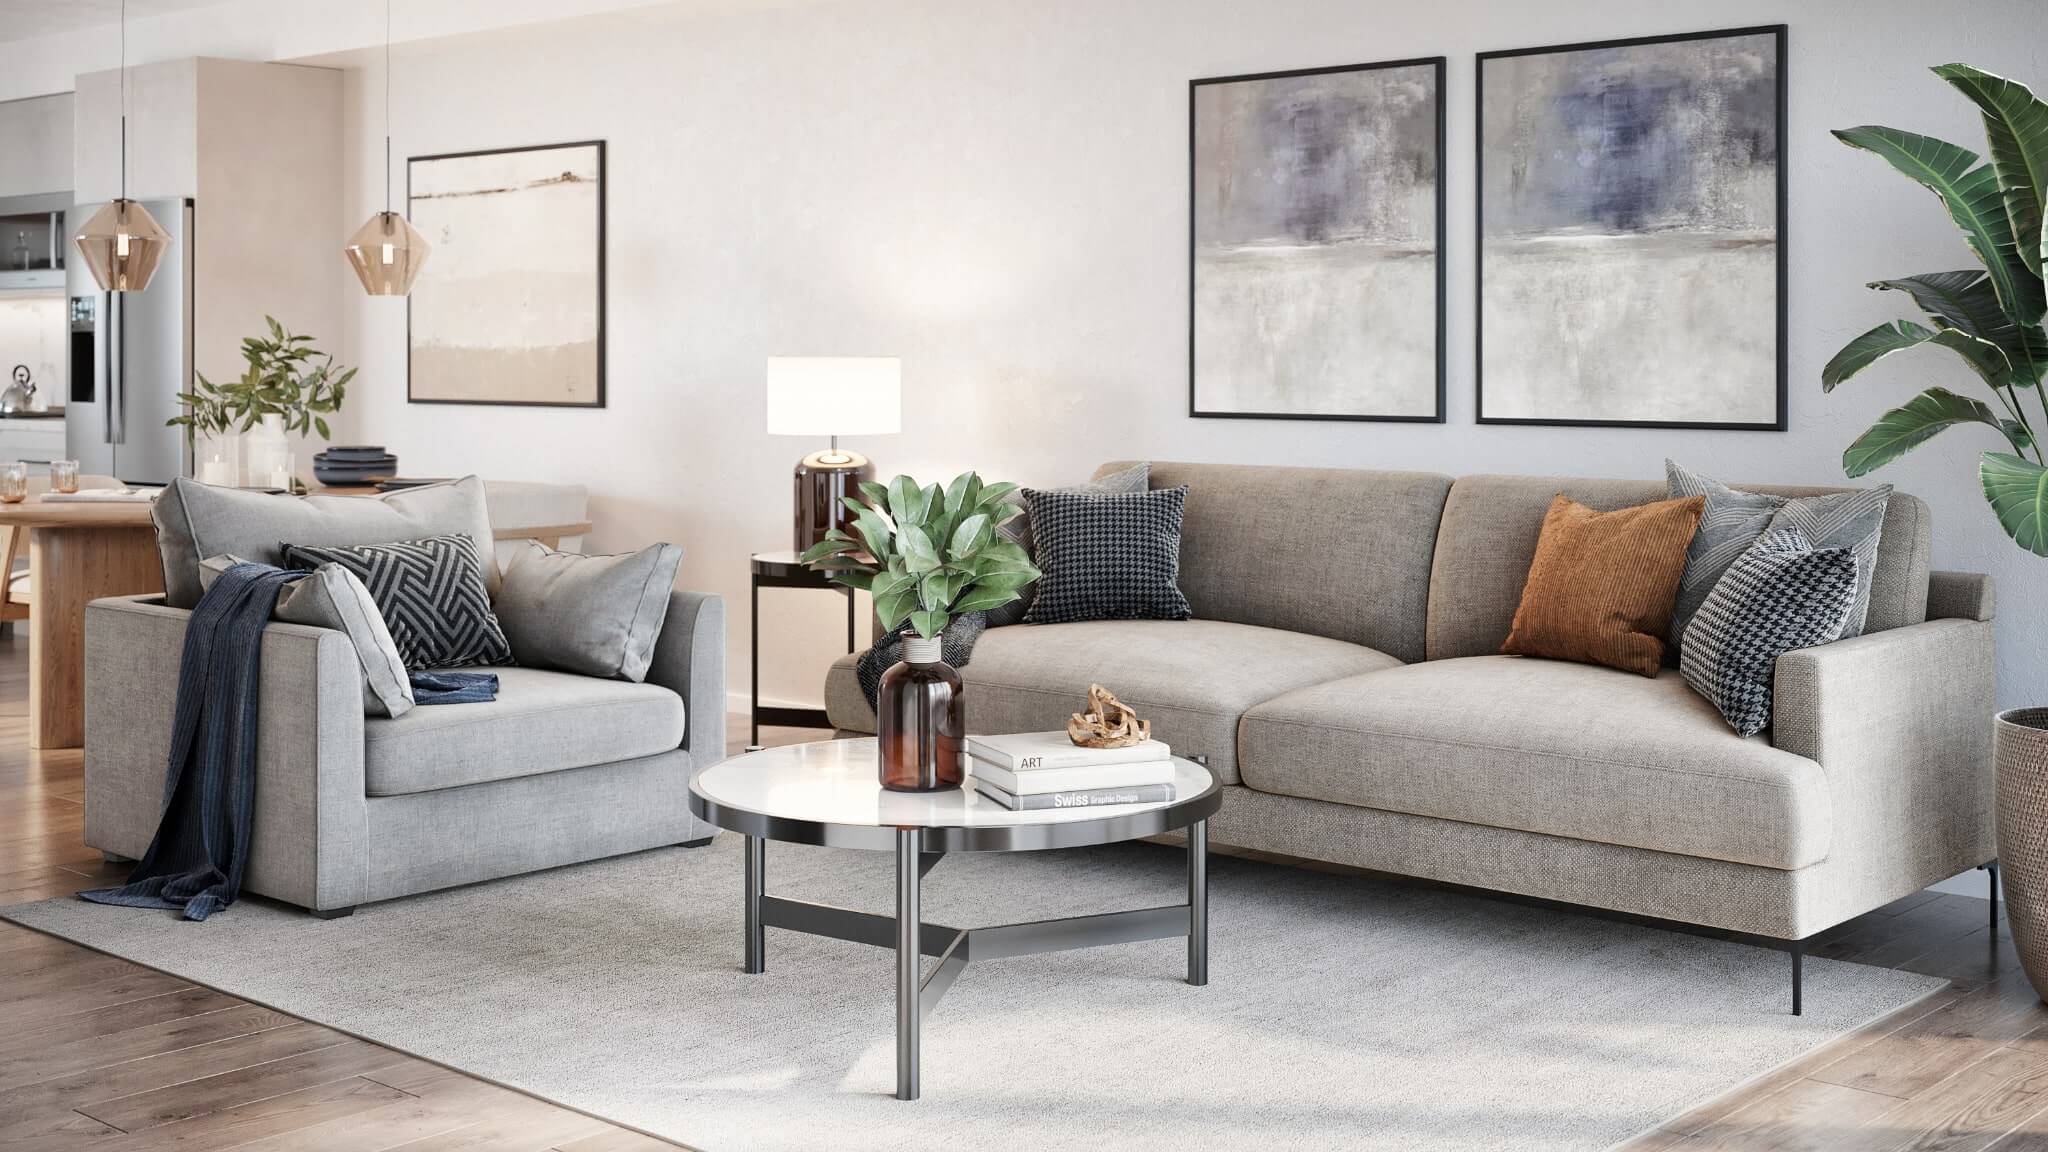 Living Room 3D Rendering for Real Estate Listing